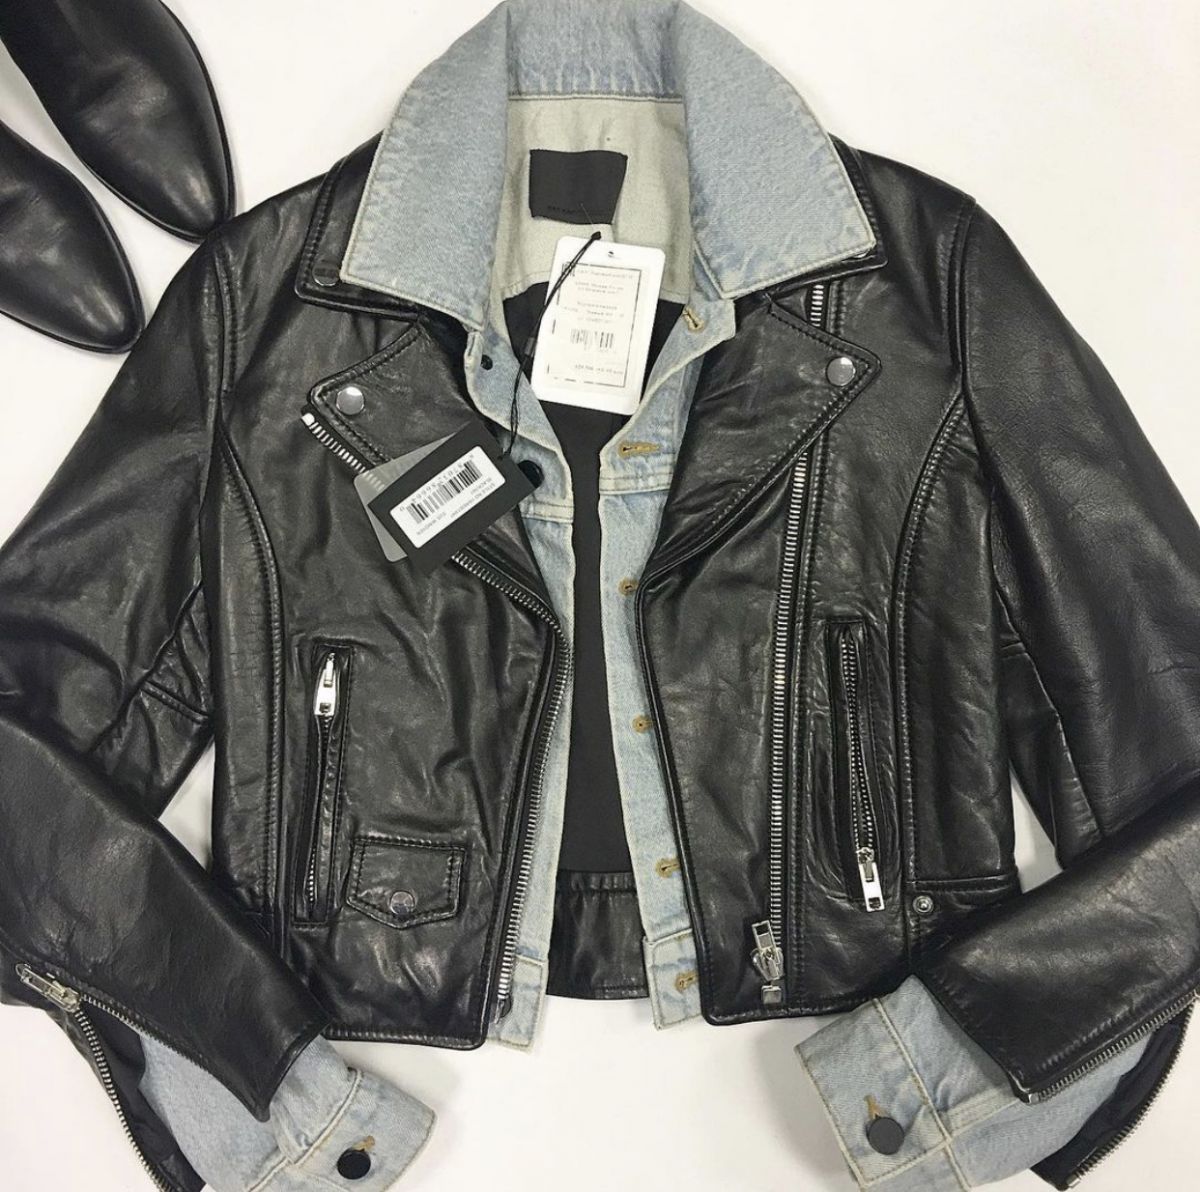 Куртка /кожа/джинса / Alexander Wang  размер М цена 53 847 руб Казаки Saint Laurent  размер 39 цена 18 463 руб